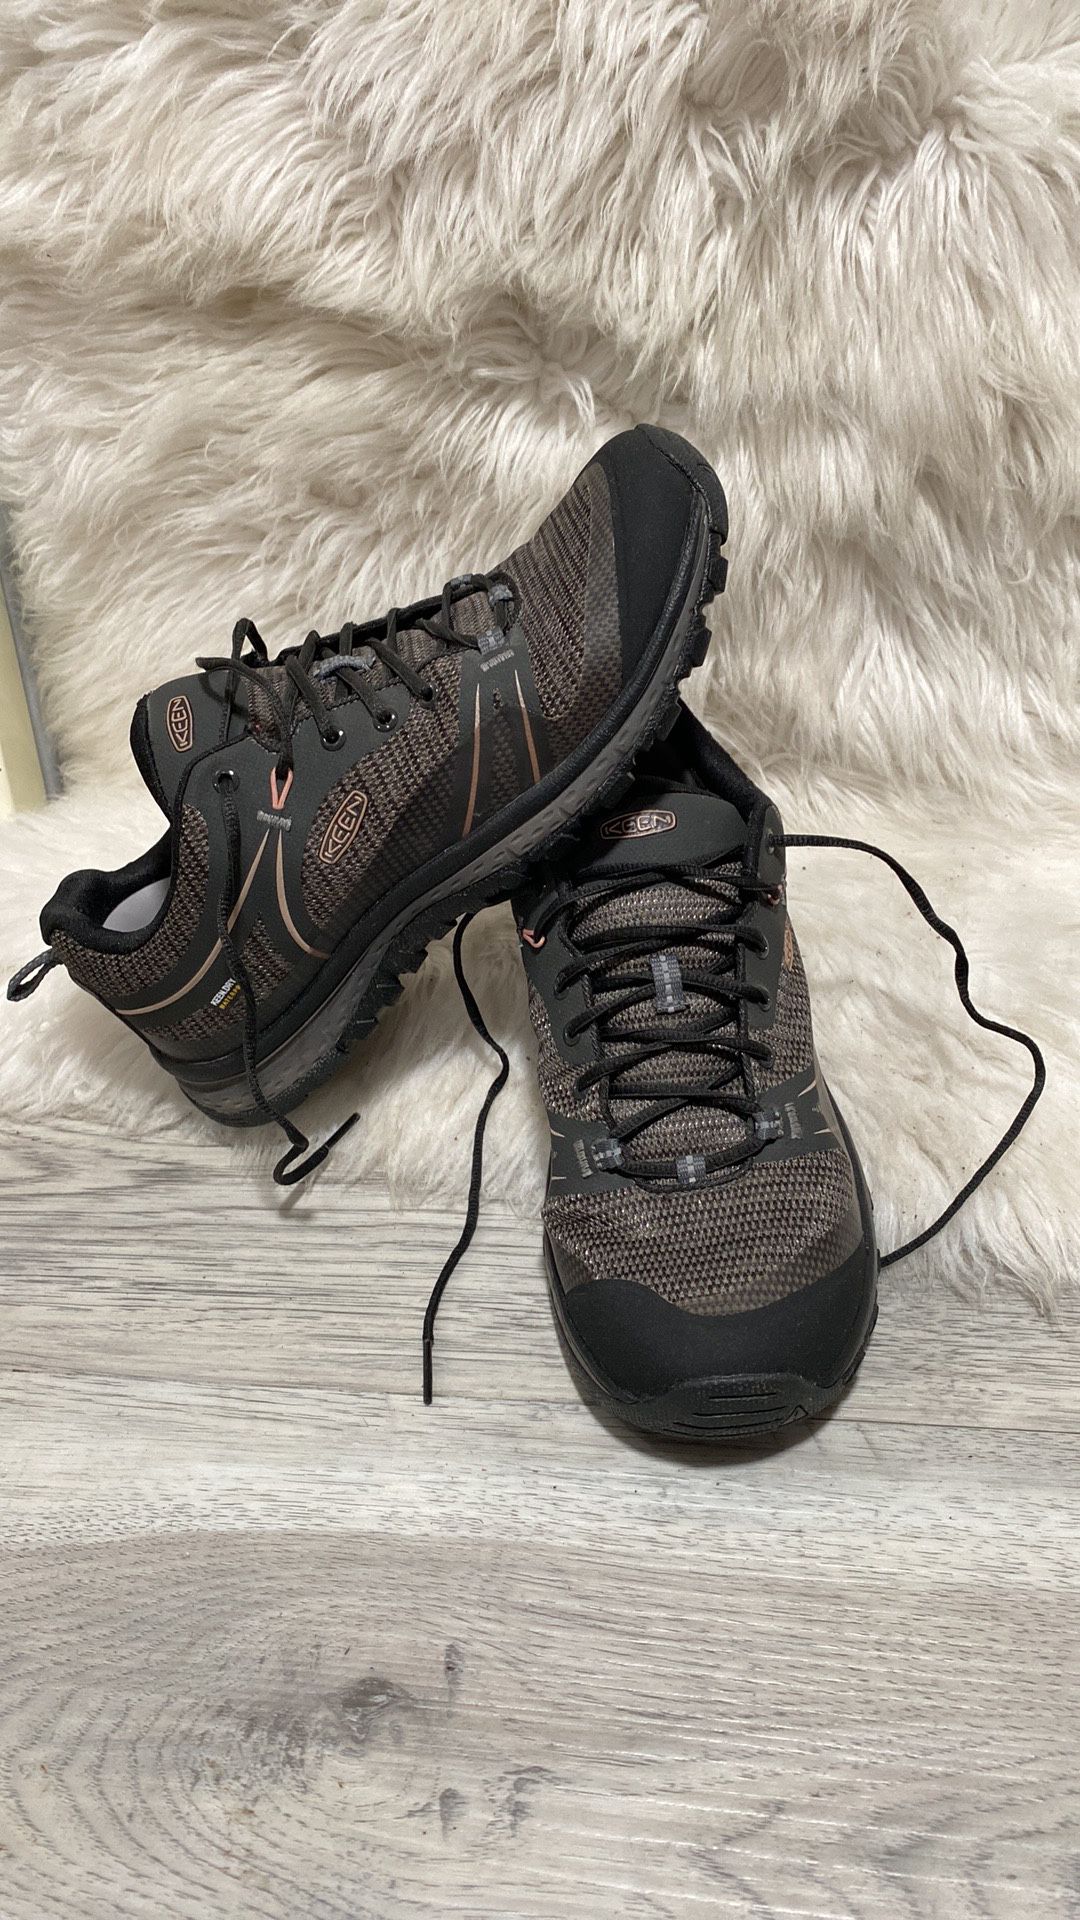 Keen Terradorra Low Top Gray Trail Hiking Shoes Size 8.5 